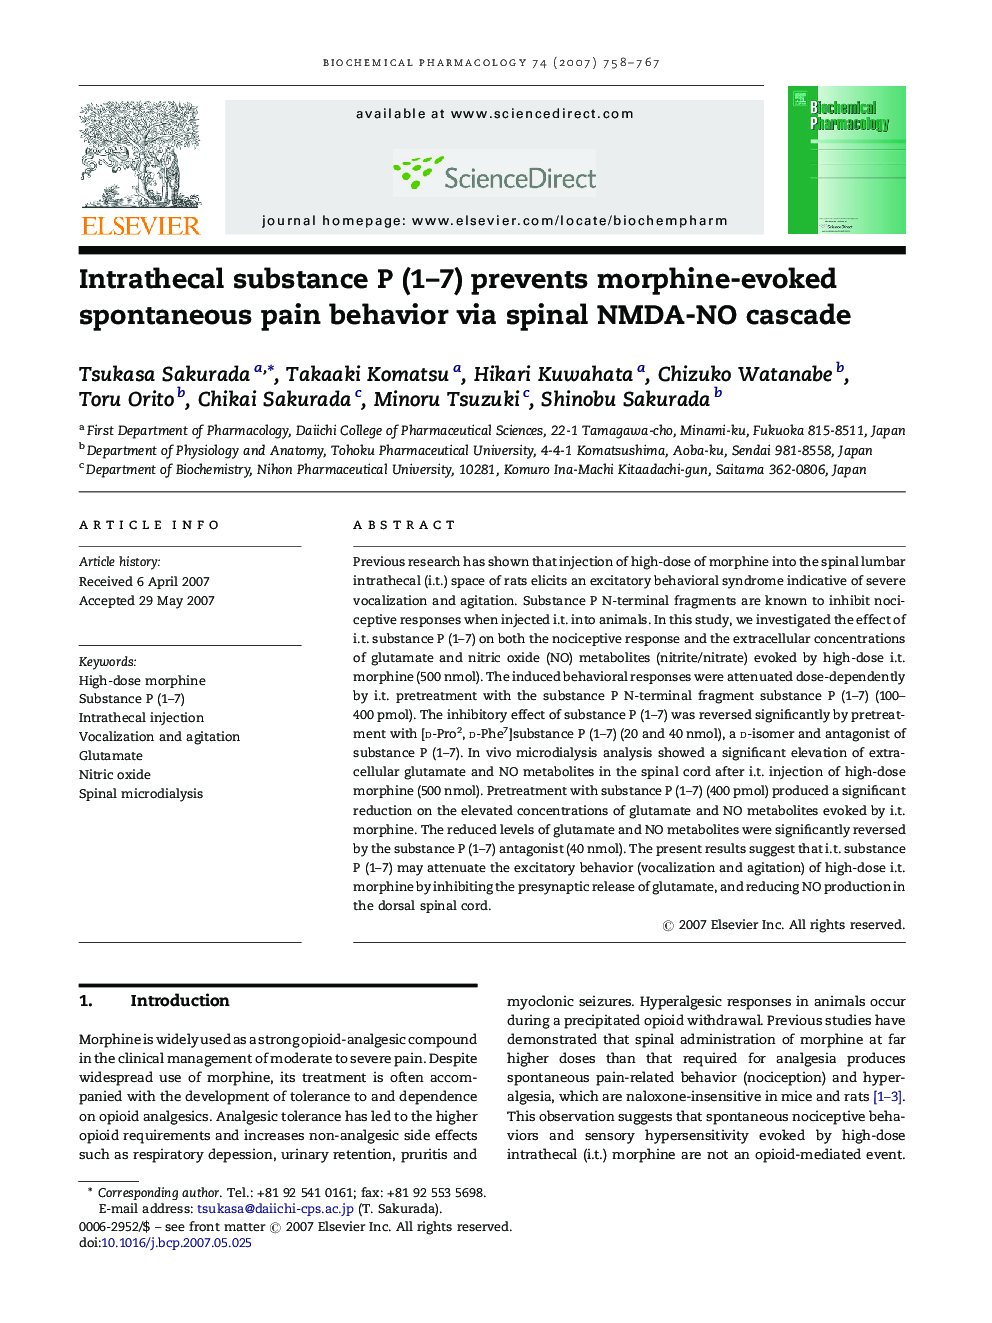 Intrathecal substance P (1–7) prevents morphine-evoked spontaneous pain behavior via spinal NMDA-NO cascade